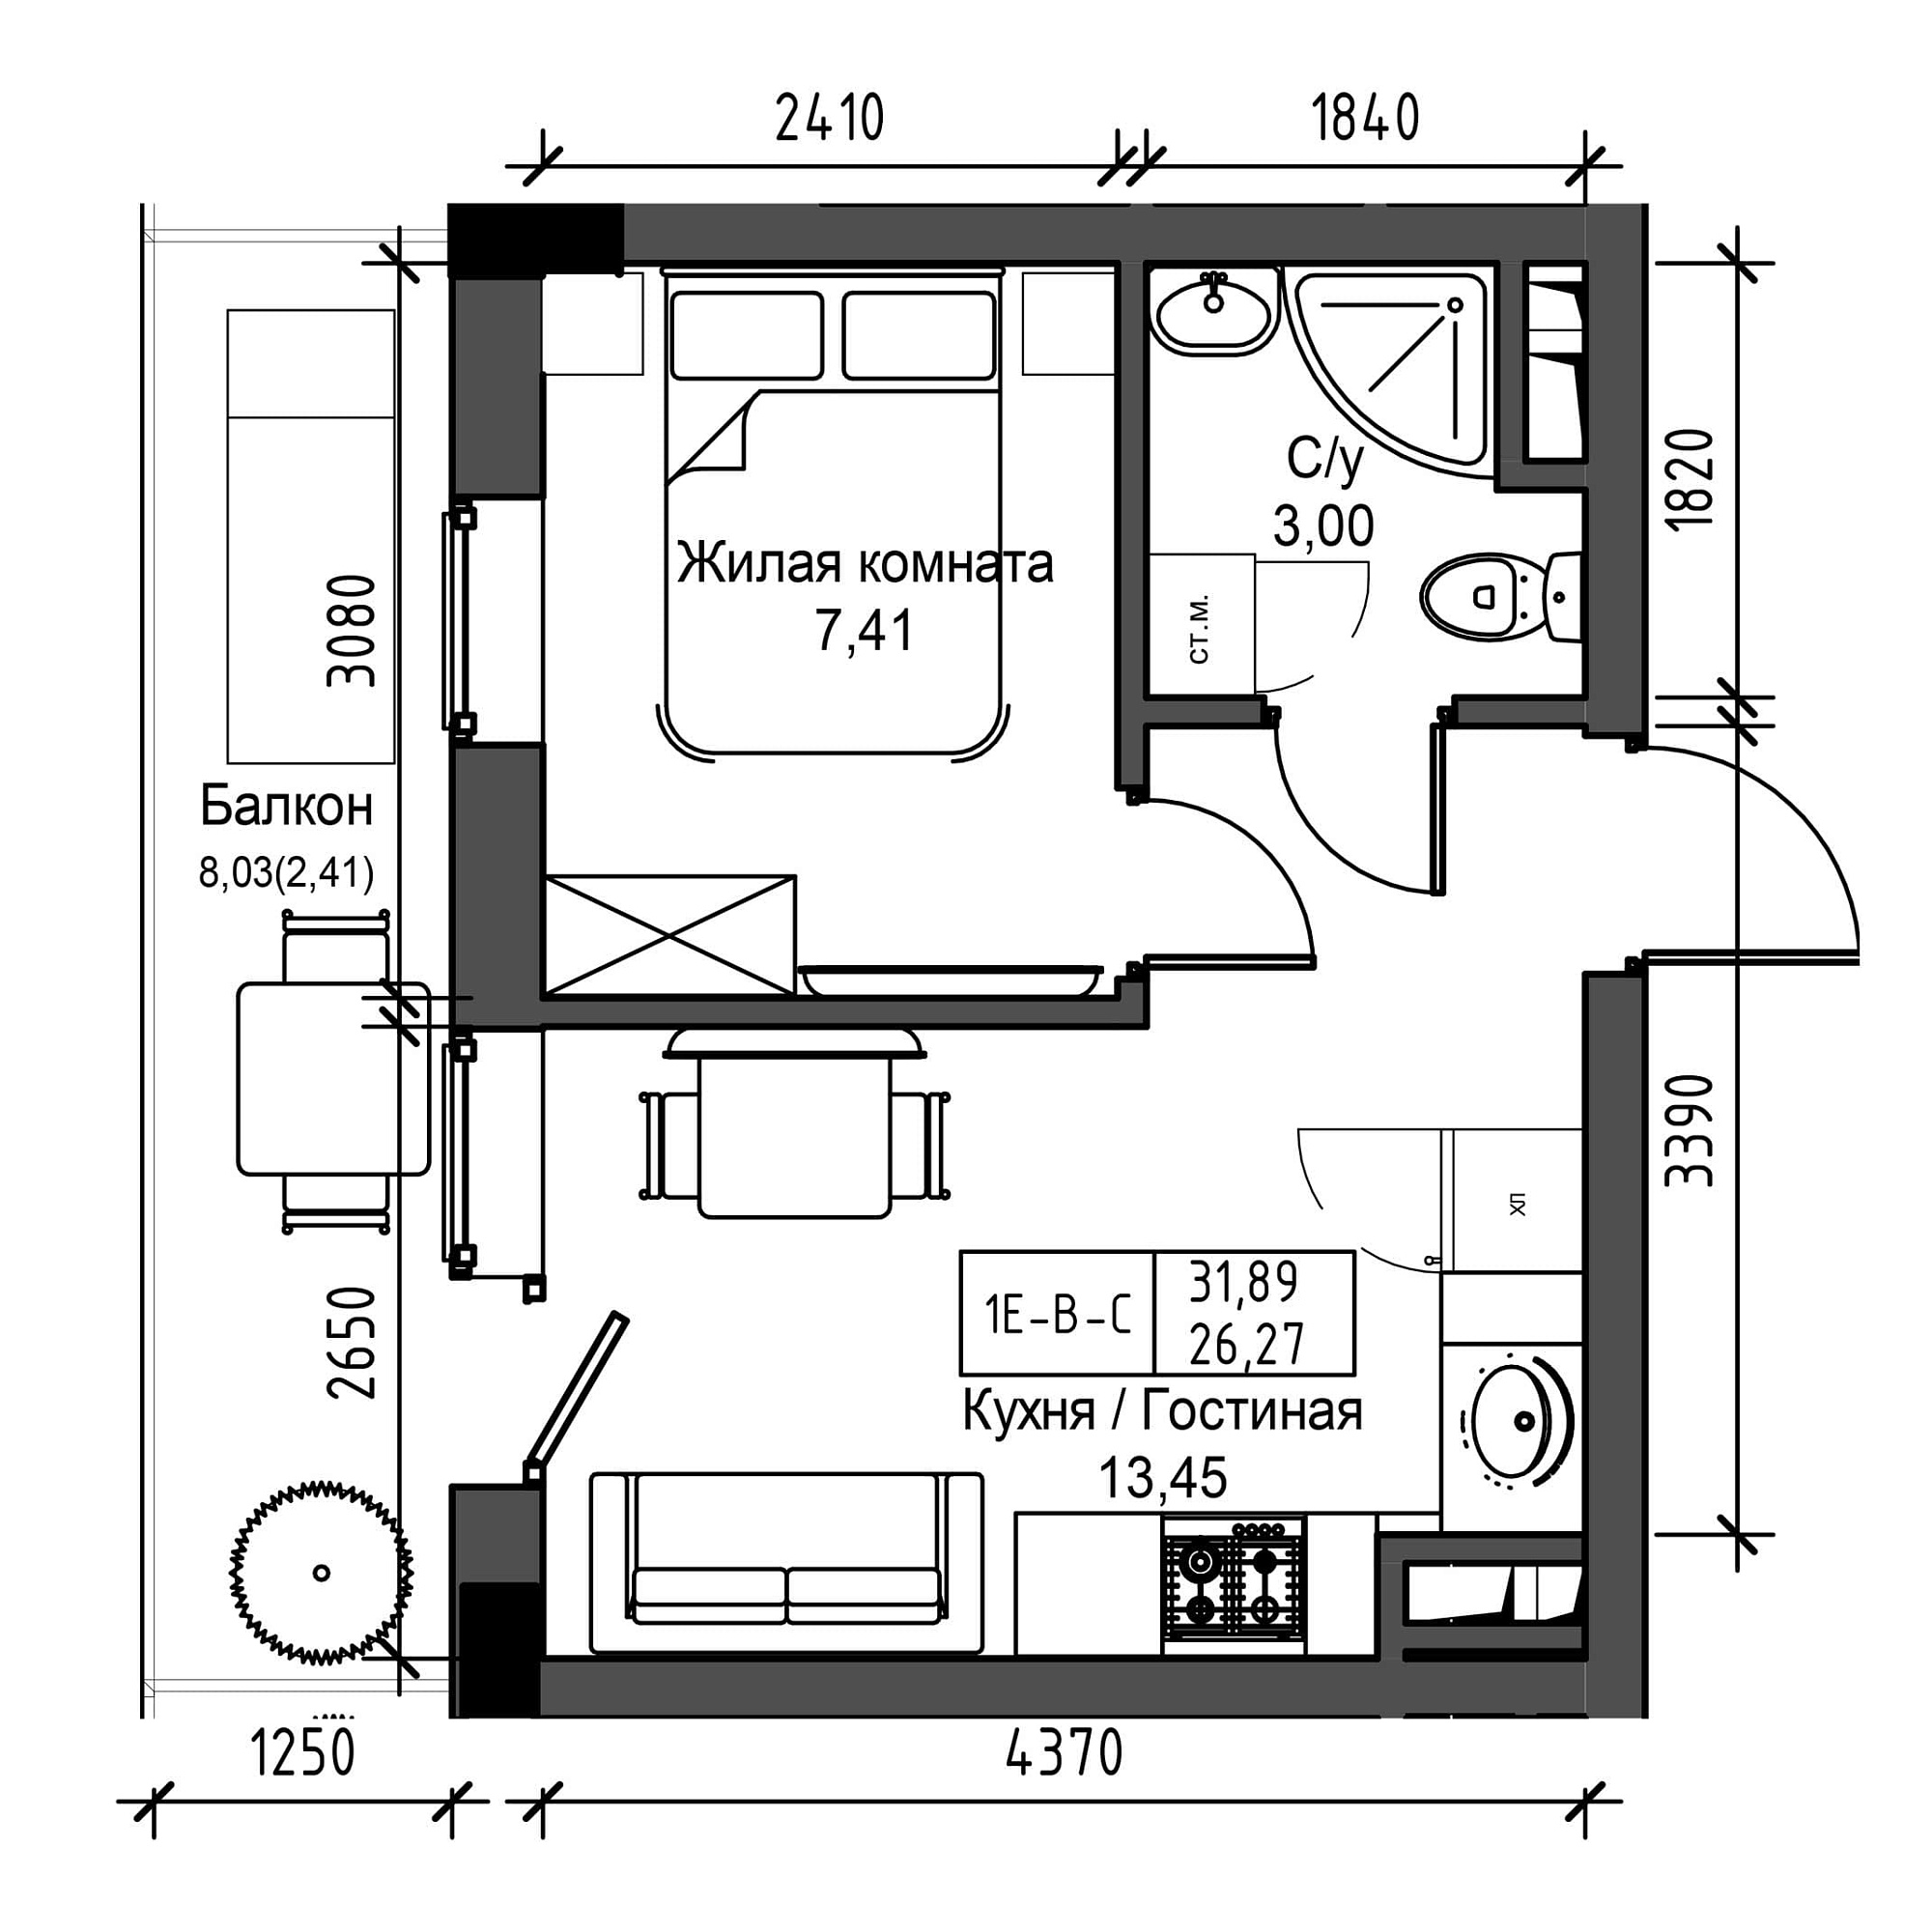 Планування 1-к квартира площею 26.27м2, UM-001-06/0015.